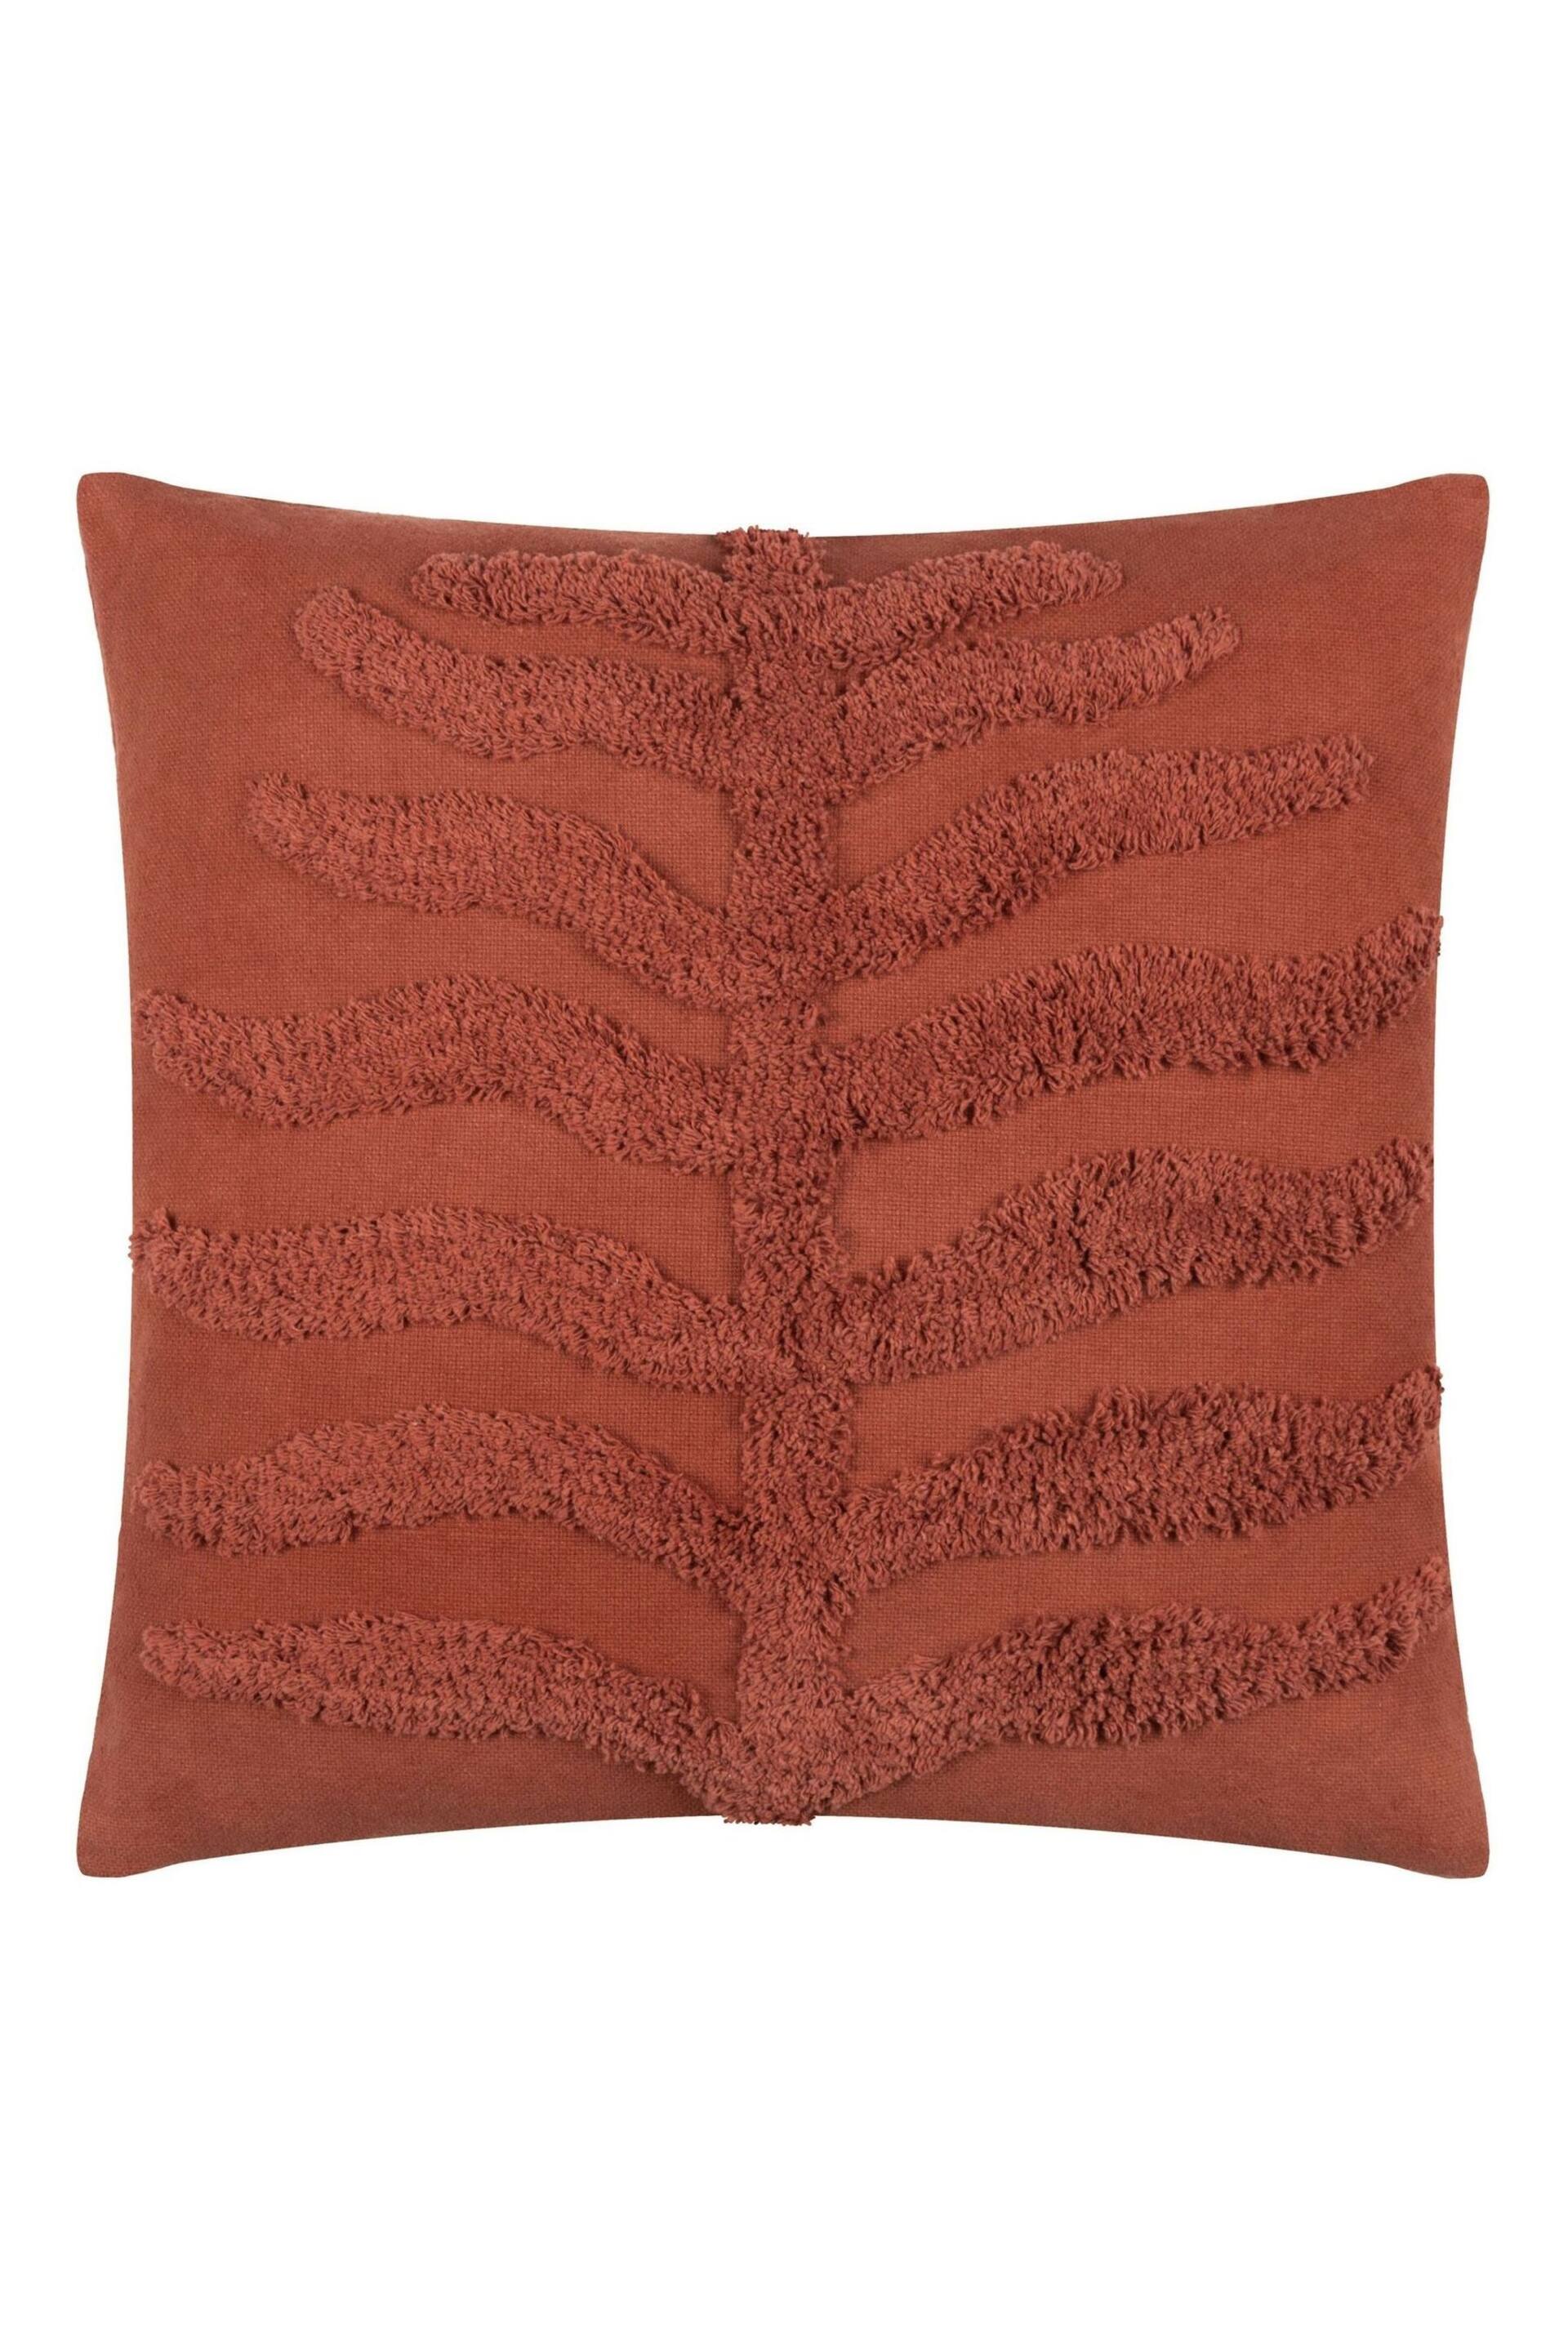 Furn Red Dakota Tufted Feather Filled Cushion - Image 3 of 6